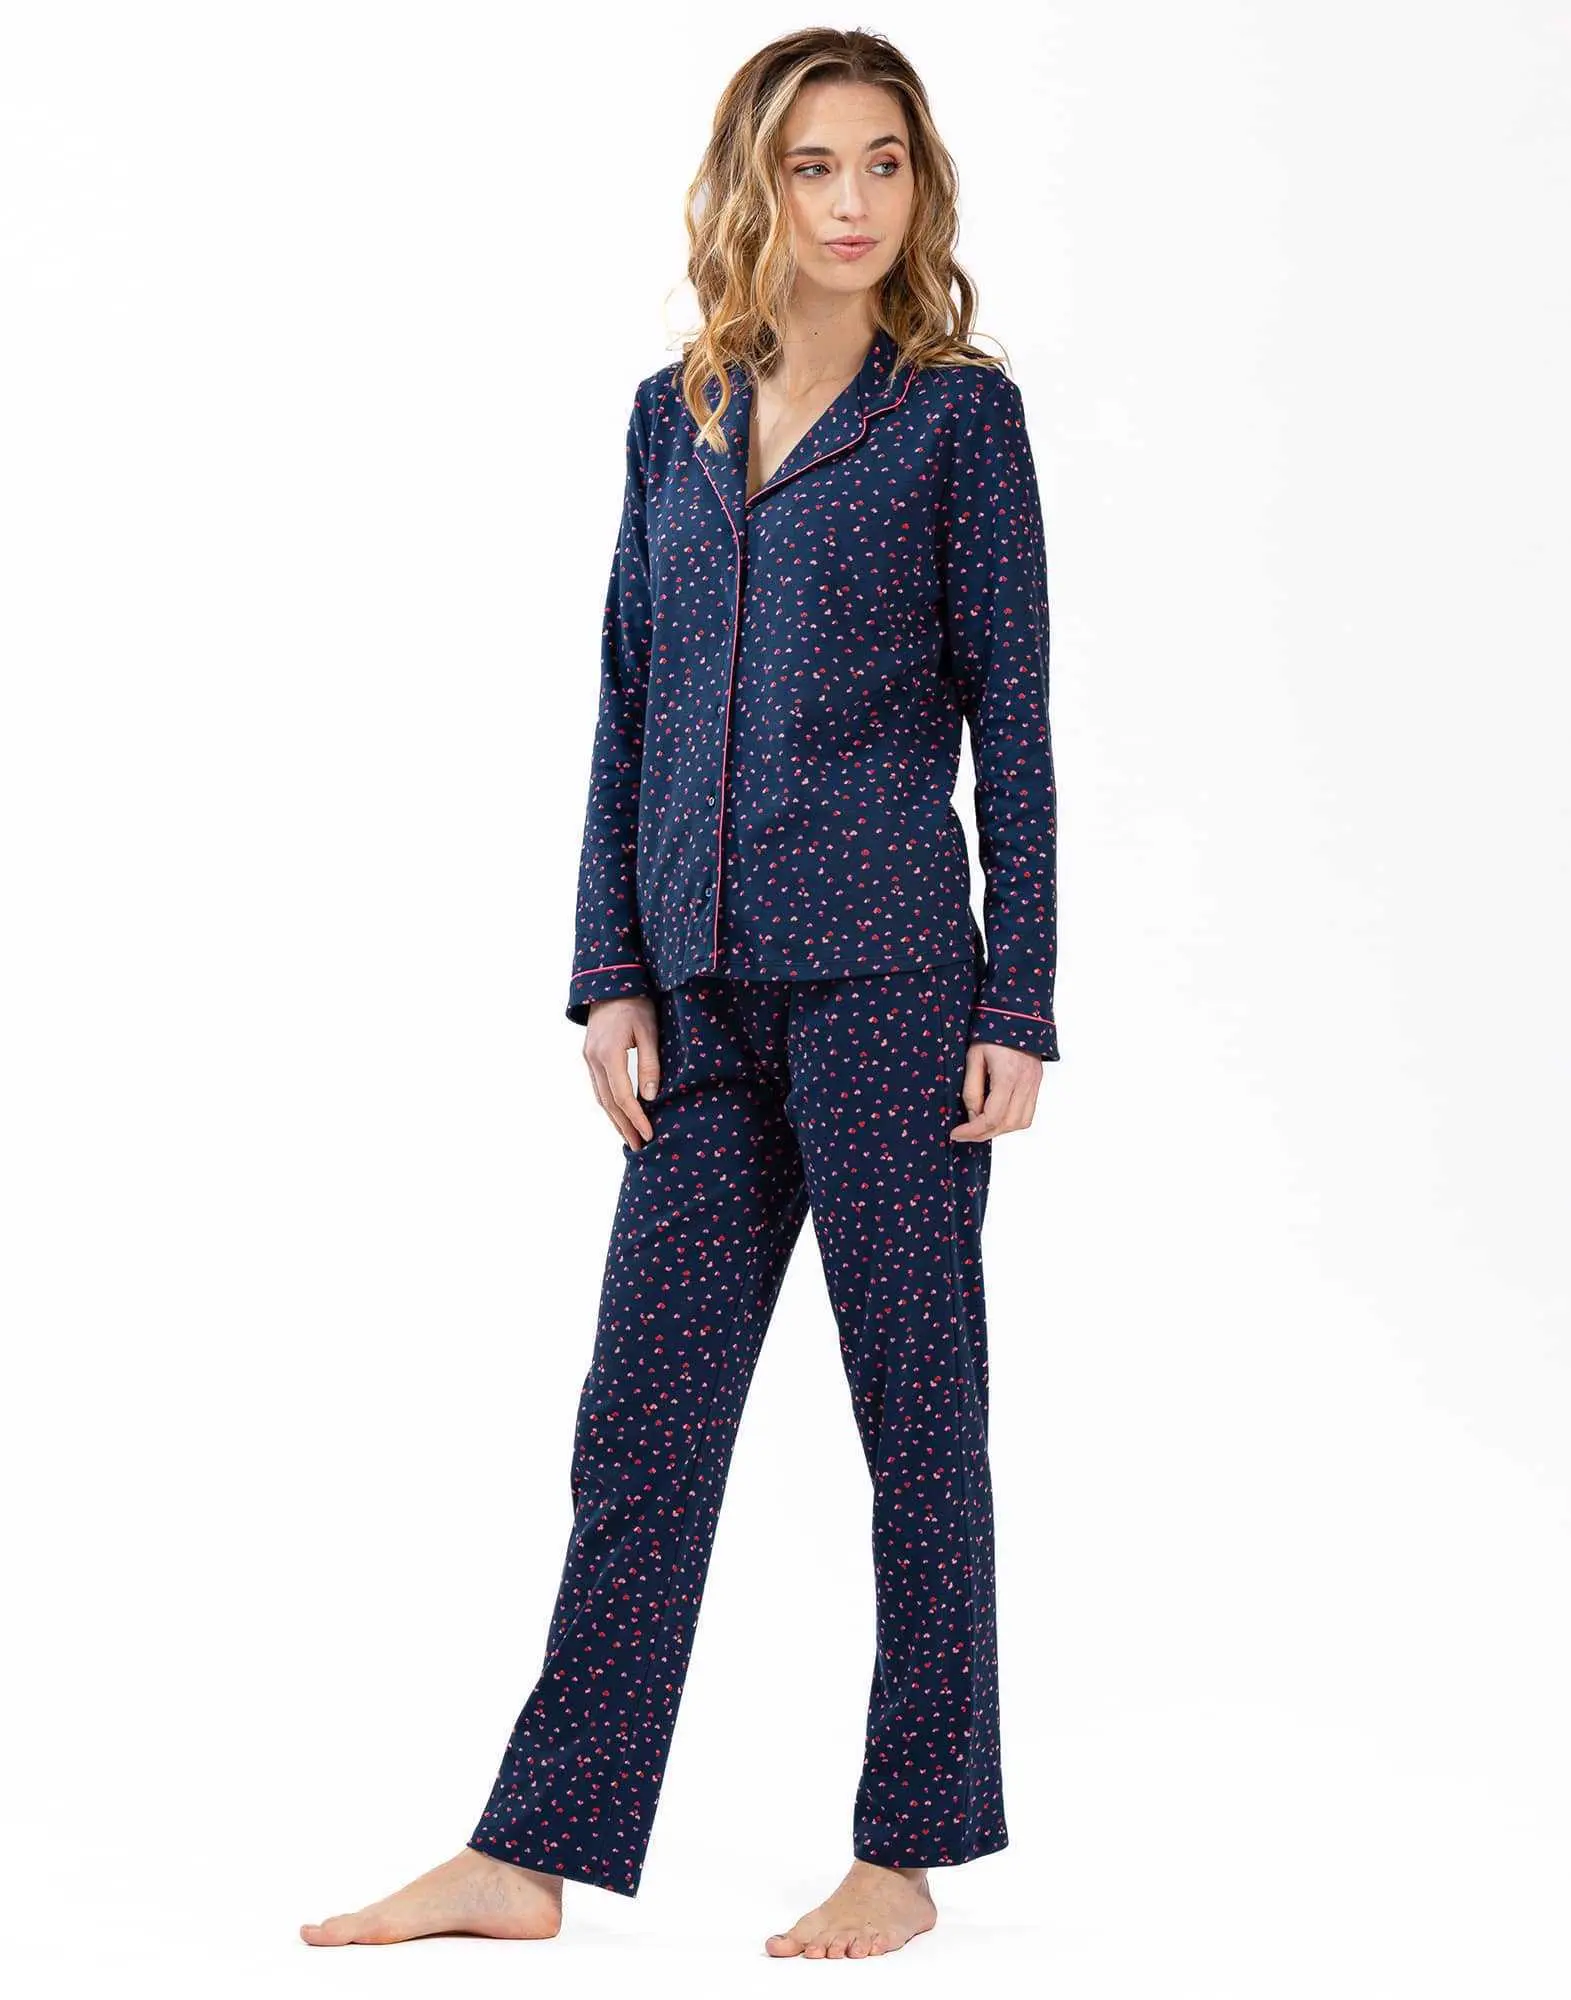 100% cotton interlock buttoned pyjamas HOLLY 606 navy blue